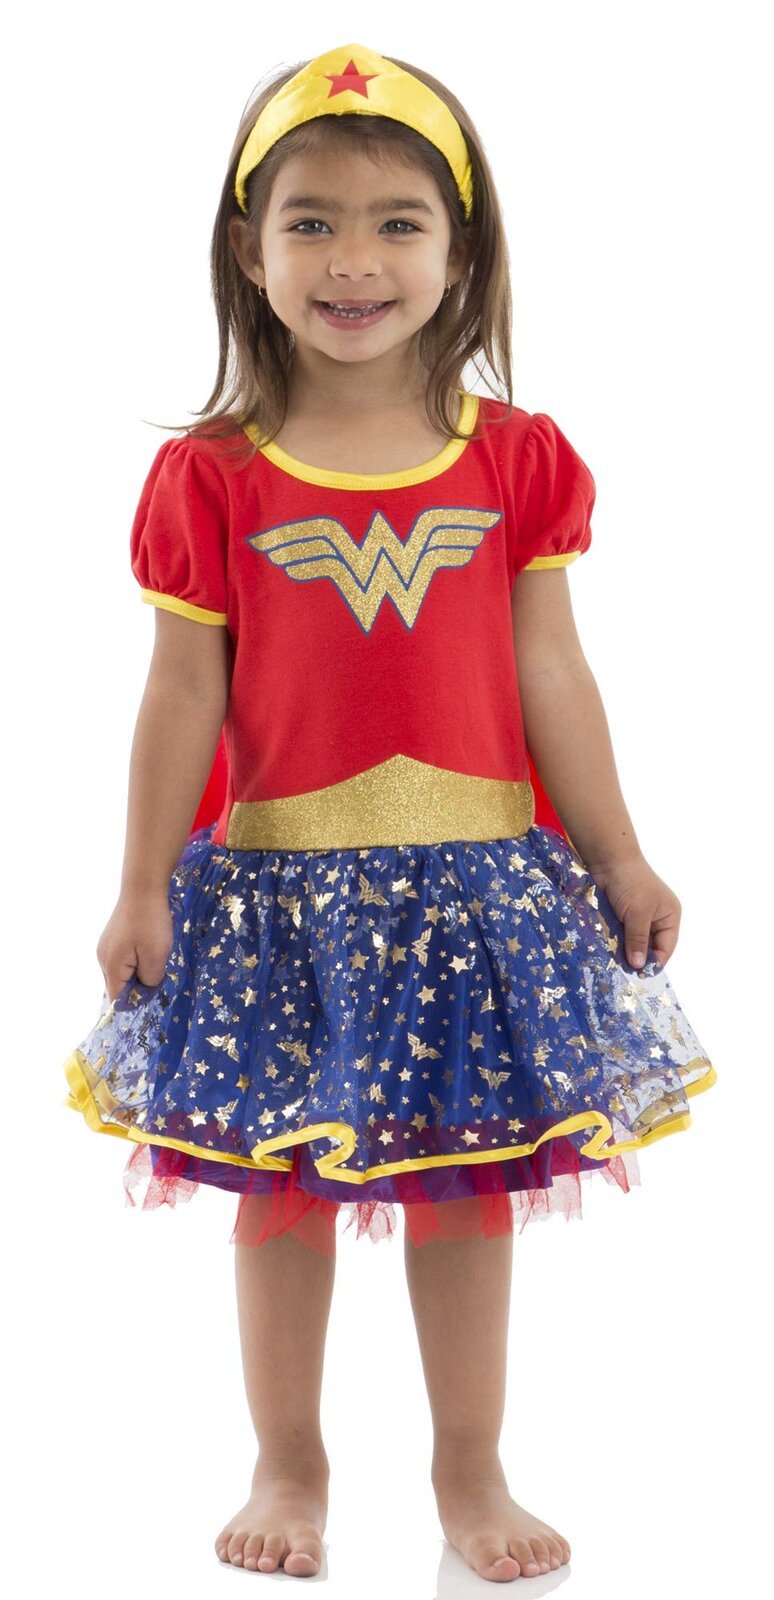 Justice League Wonder Woman Cosplay Tulle Costume Dress Cape and Headband 3 Piece Set - imagikids